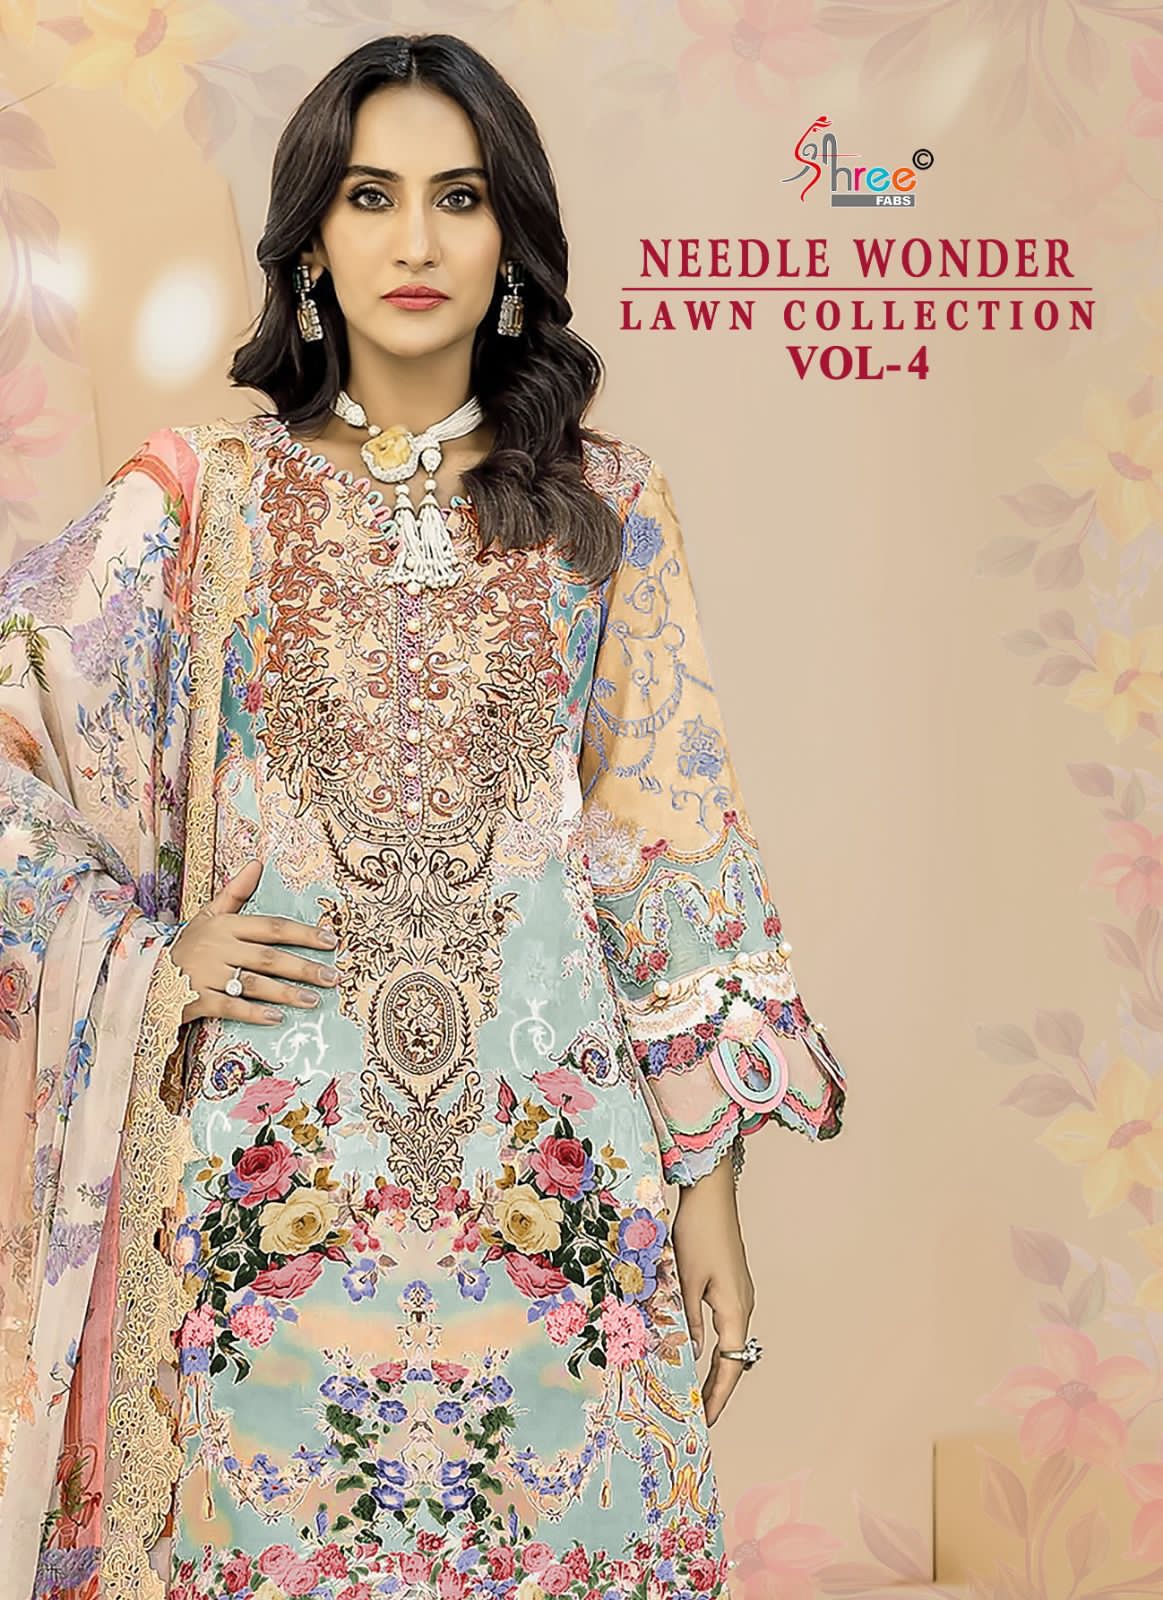 Shree fabs needle wonder lawn collection vol 4 cotton with embroidery work cotton dupatta wholesale pakistani suit - jilaniwholesalesuit